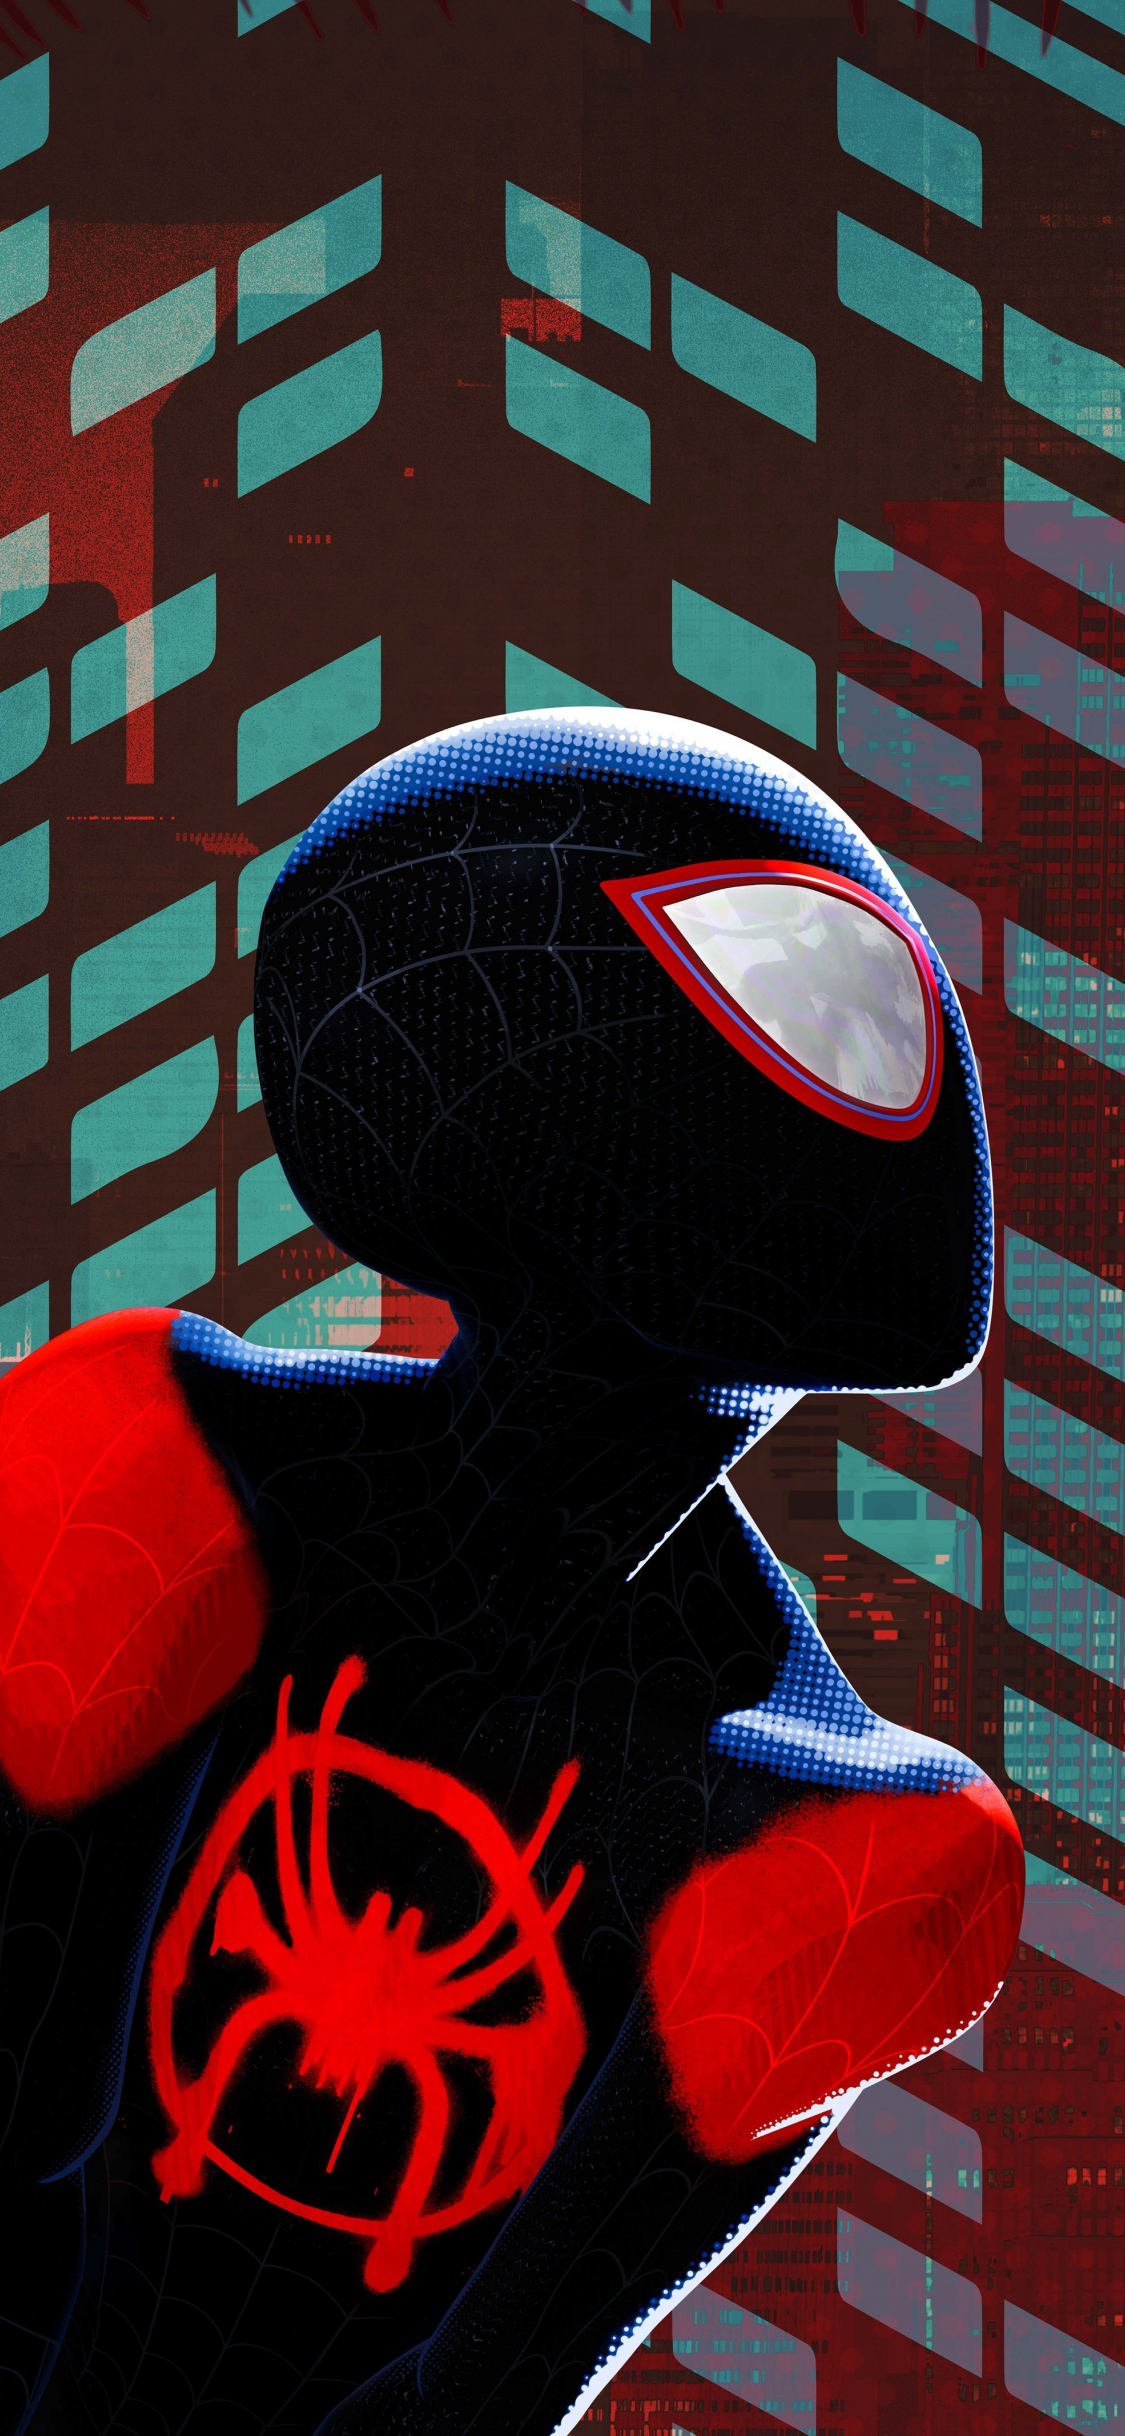 Download wallpaper x miles morales black suit spider